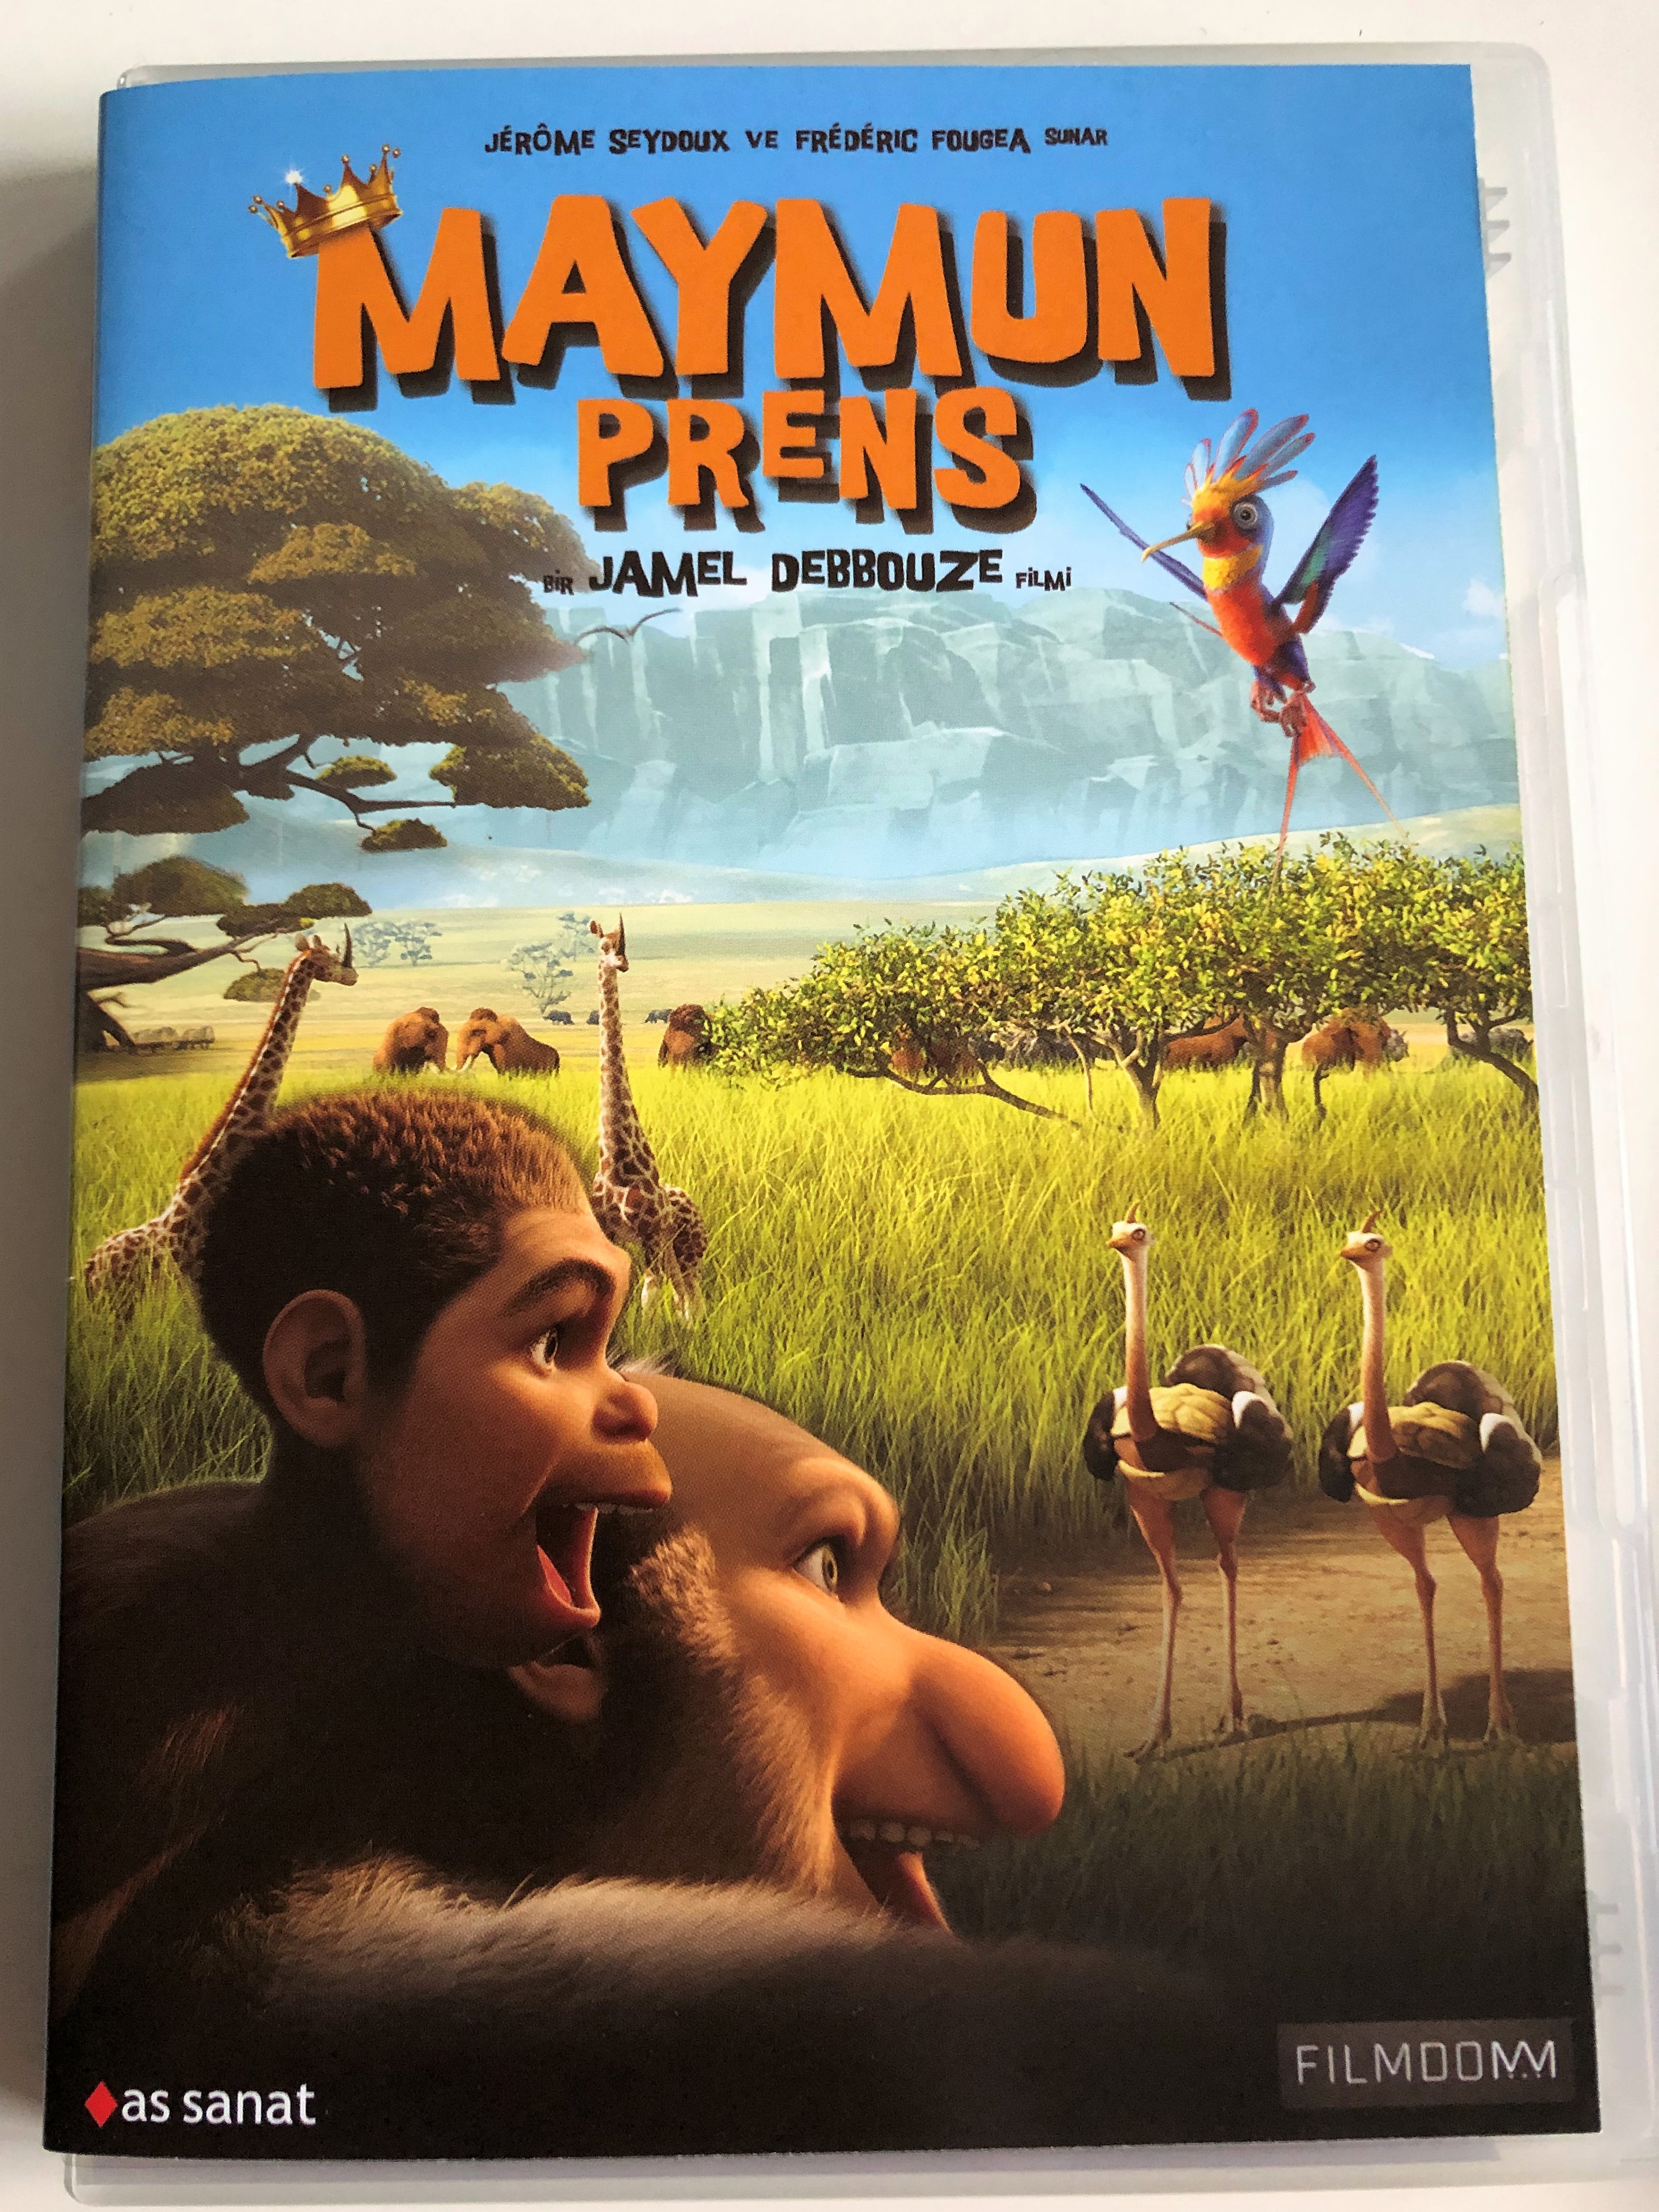 maymun-prens-dvd-2015-monkey-prince-directed-by-jamel-debbouze-written-by-j-rome-seydoux-fr-d-ric-fougea-animasyon-animated-film-1-.jpg